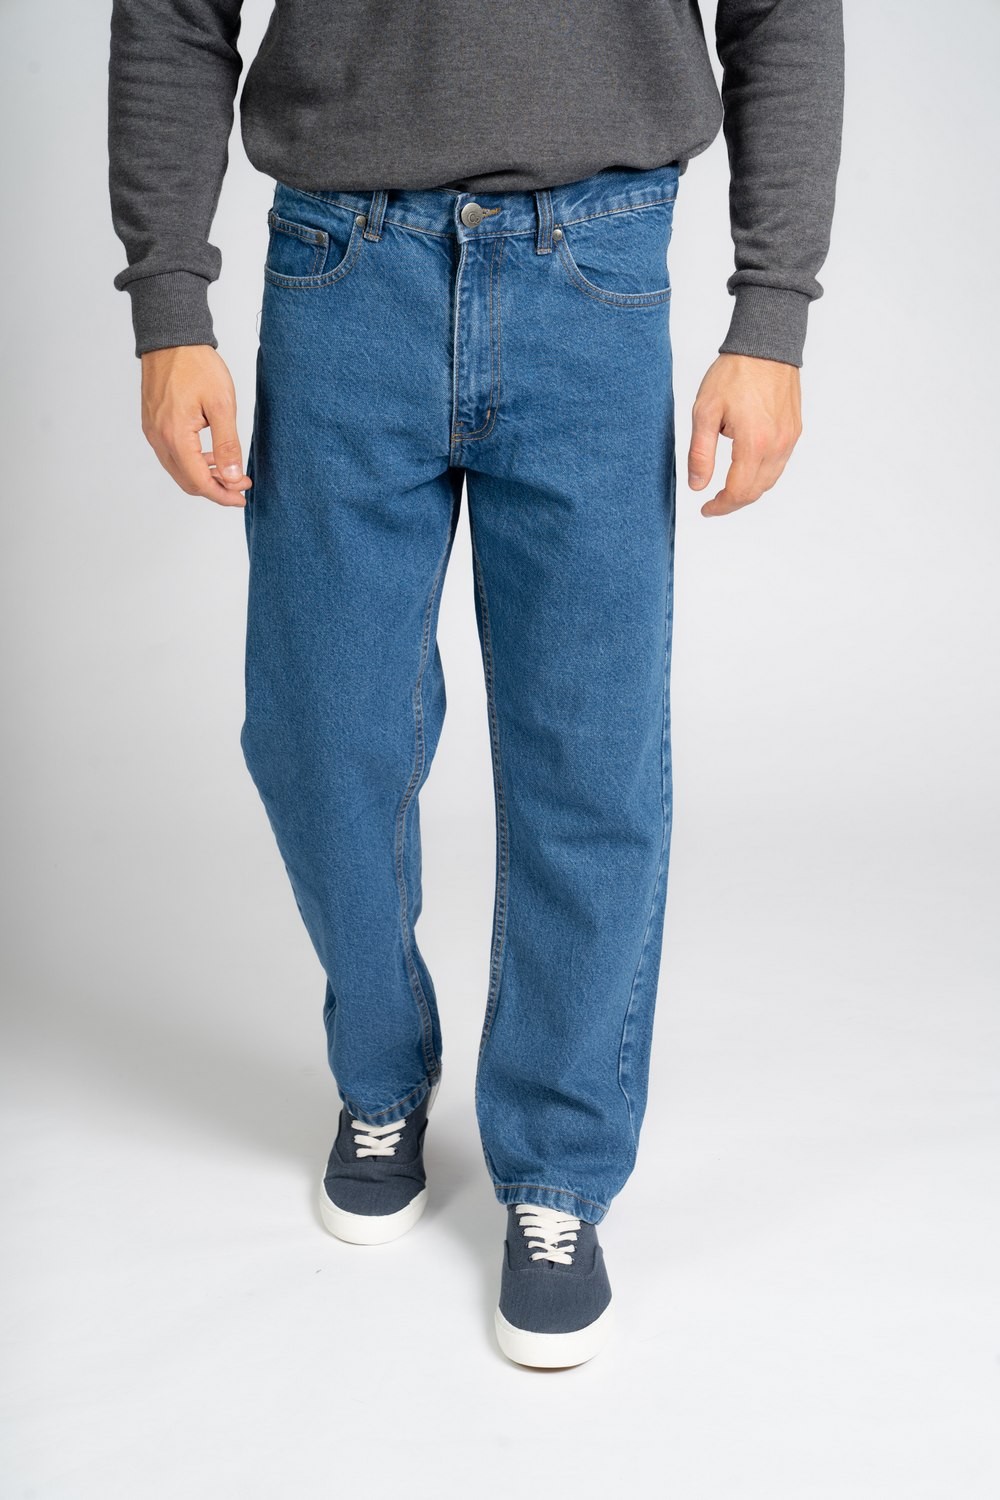 Carabou Jeans ACJ waist size 34R